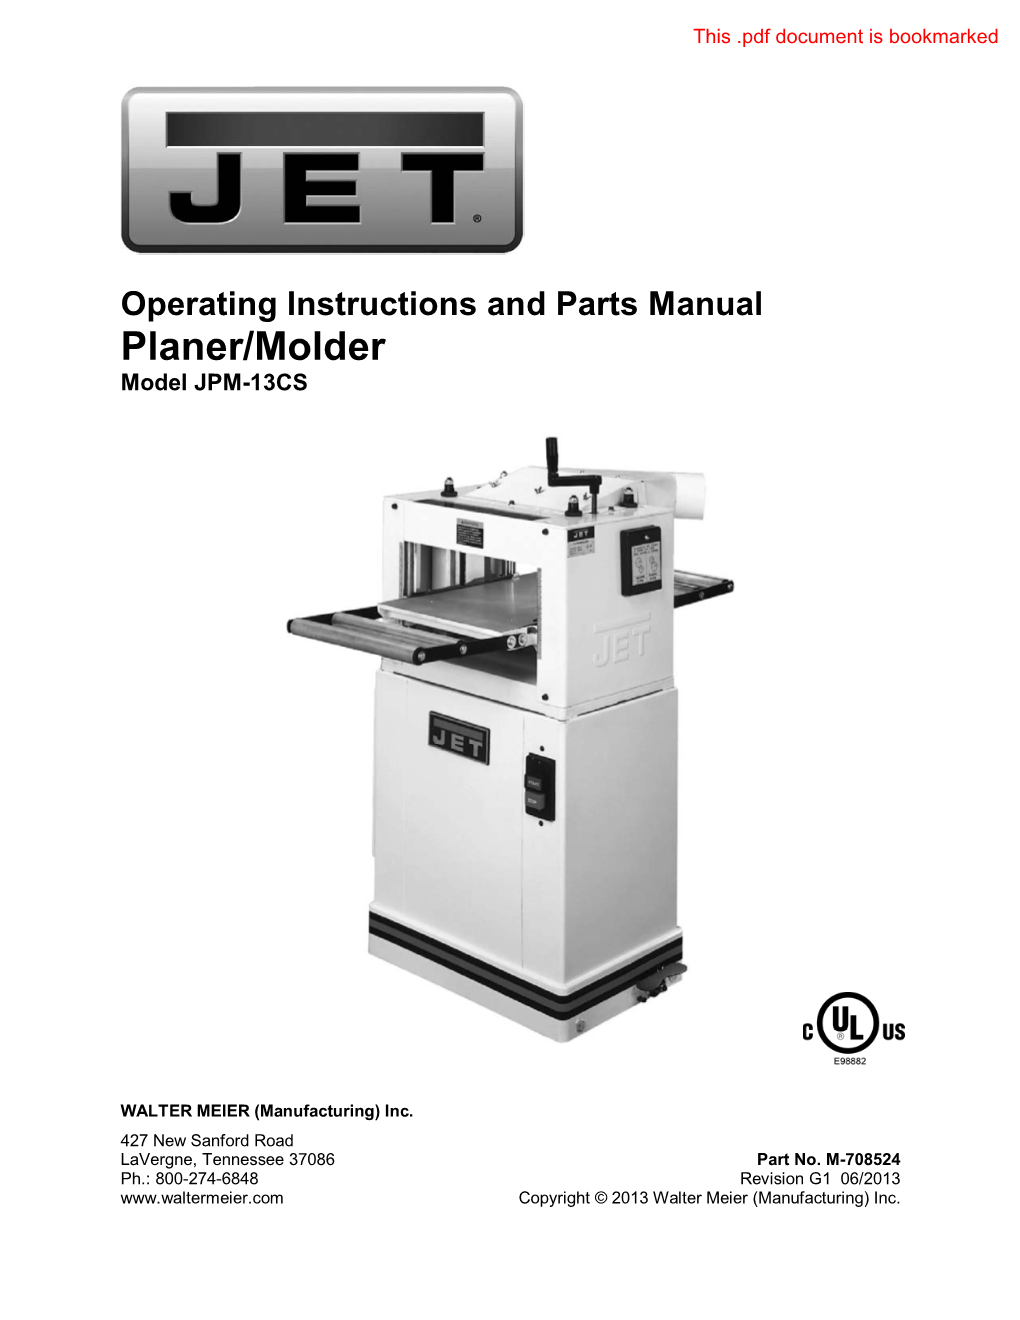 Planer/Molder Model JPM-13CS